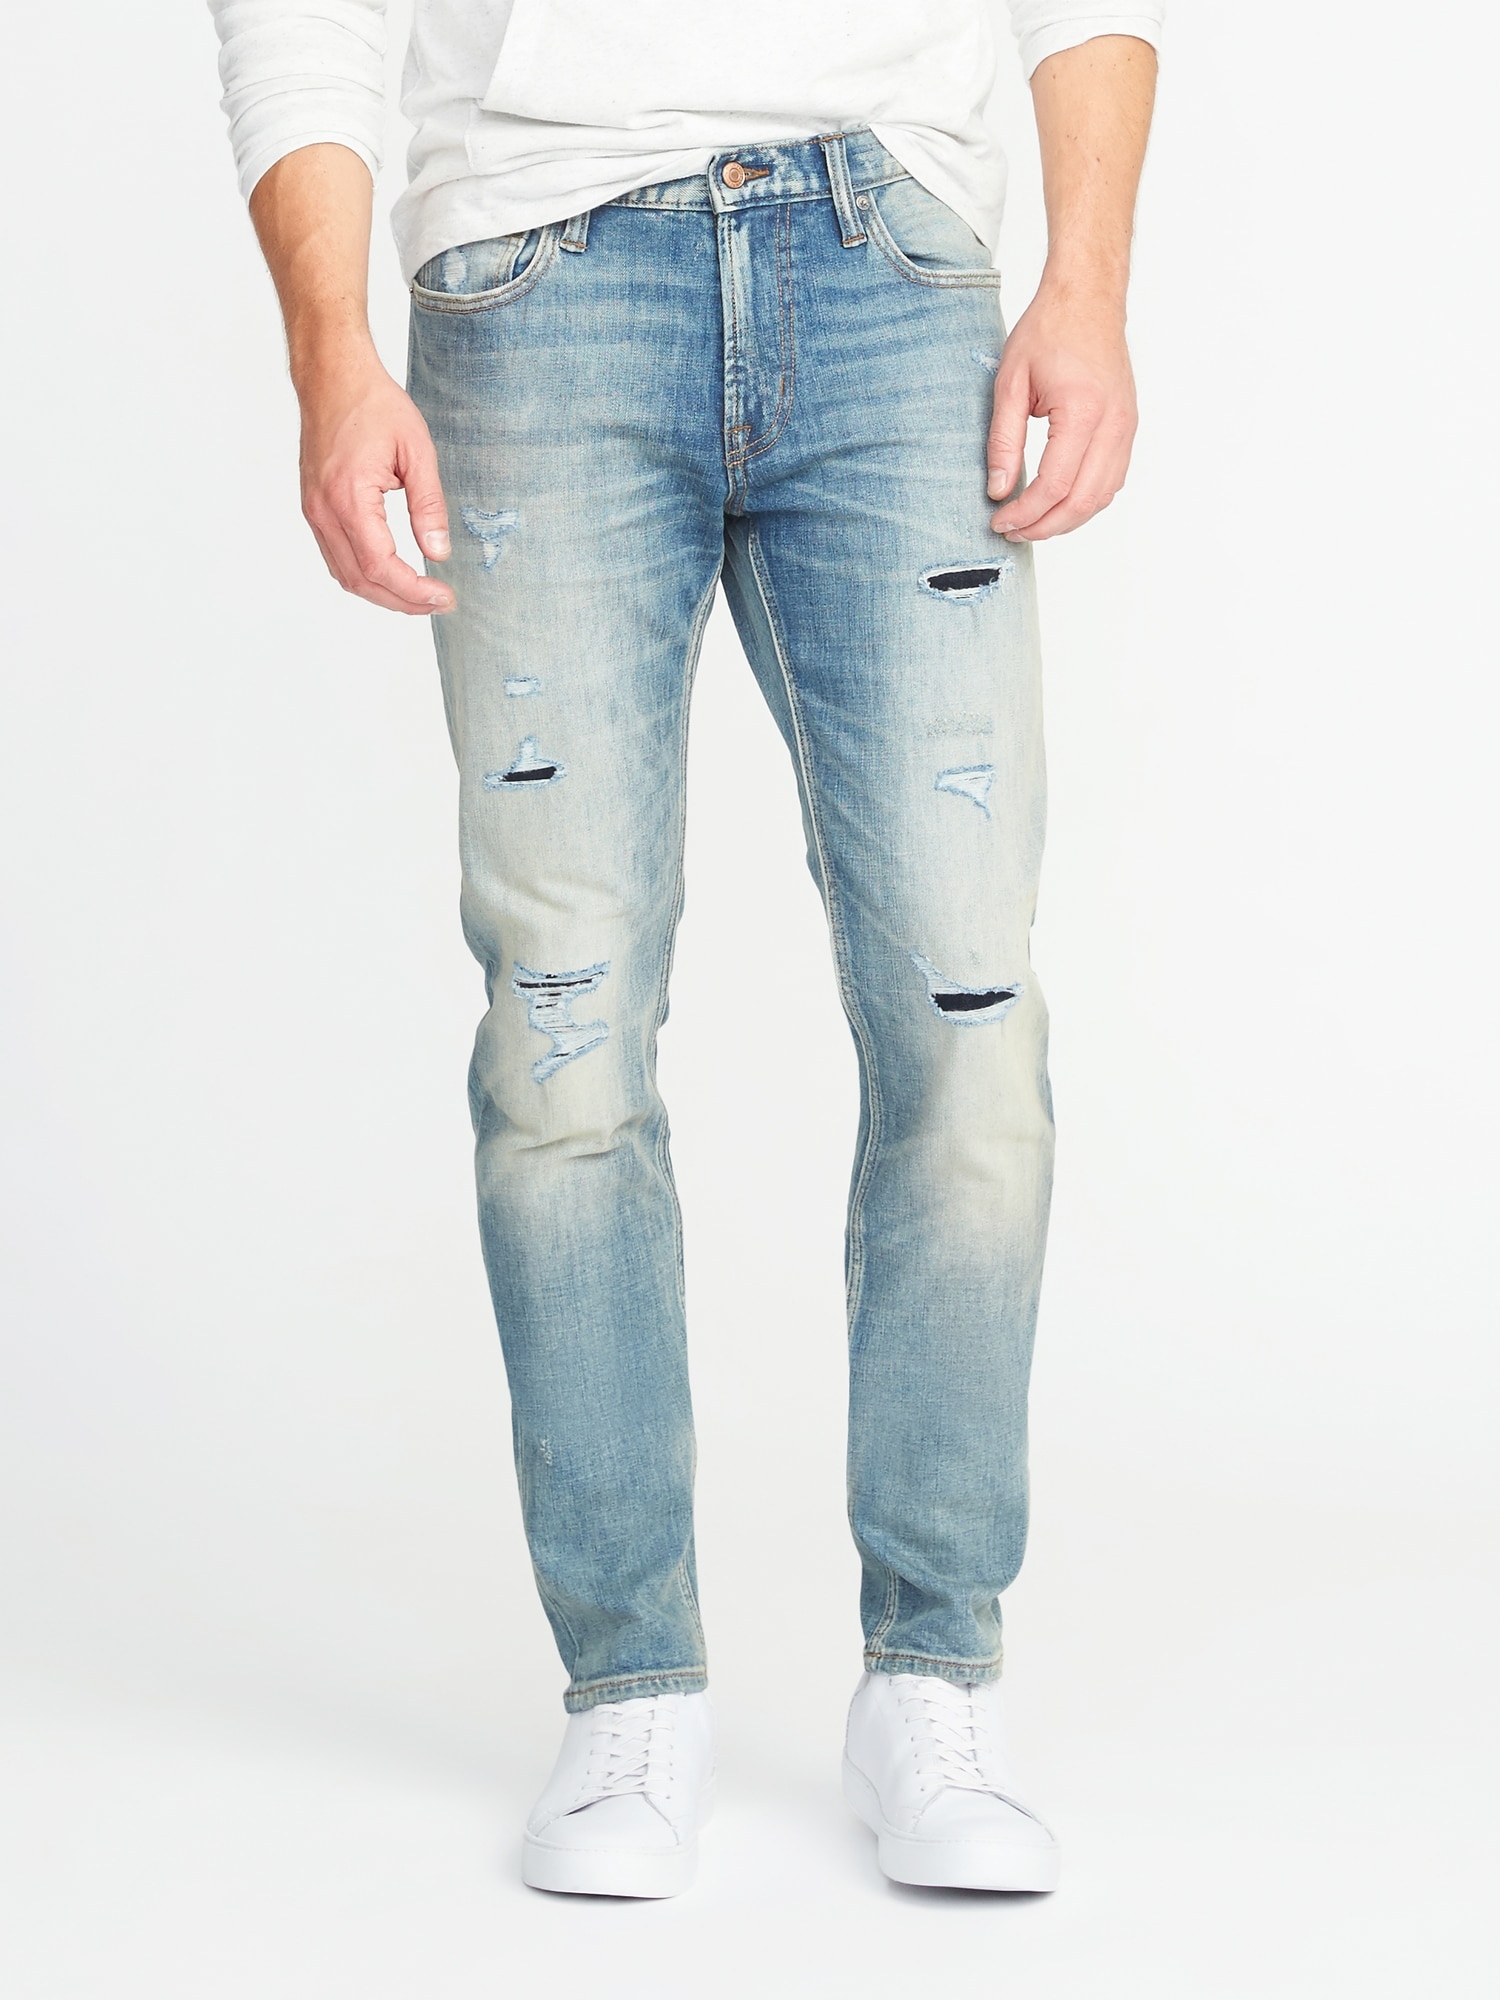 flex skinny jeans mens